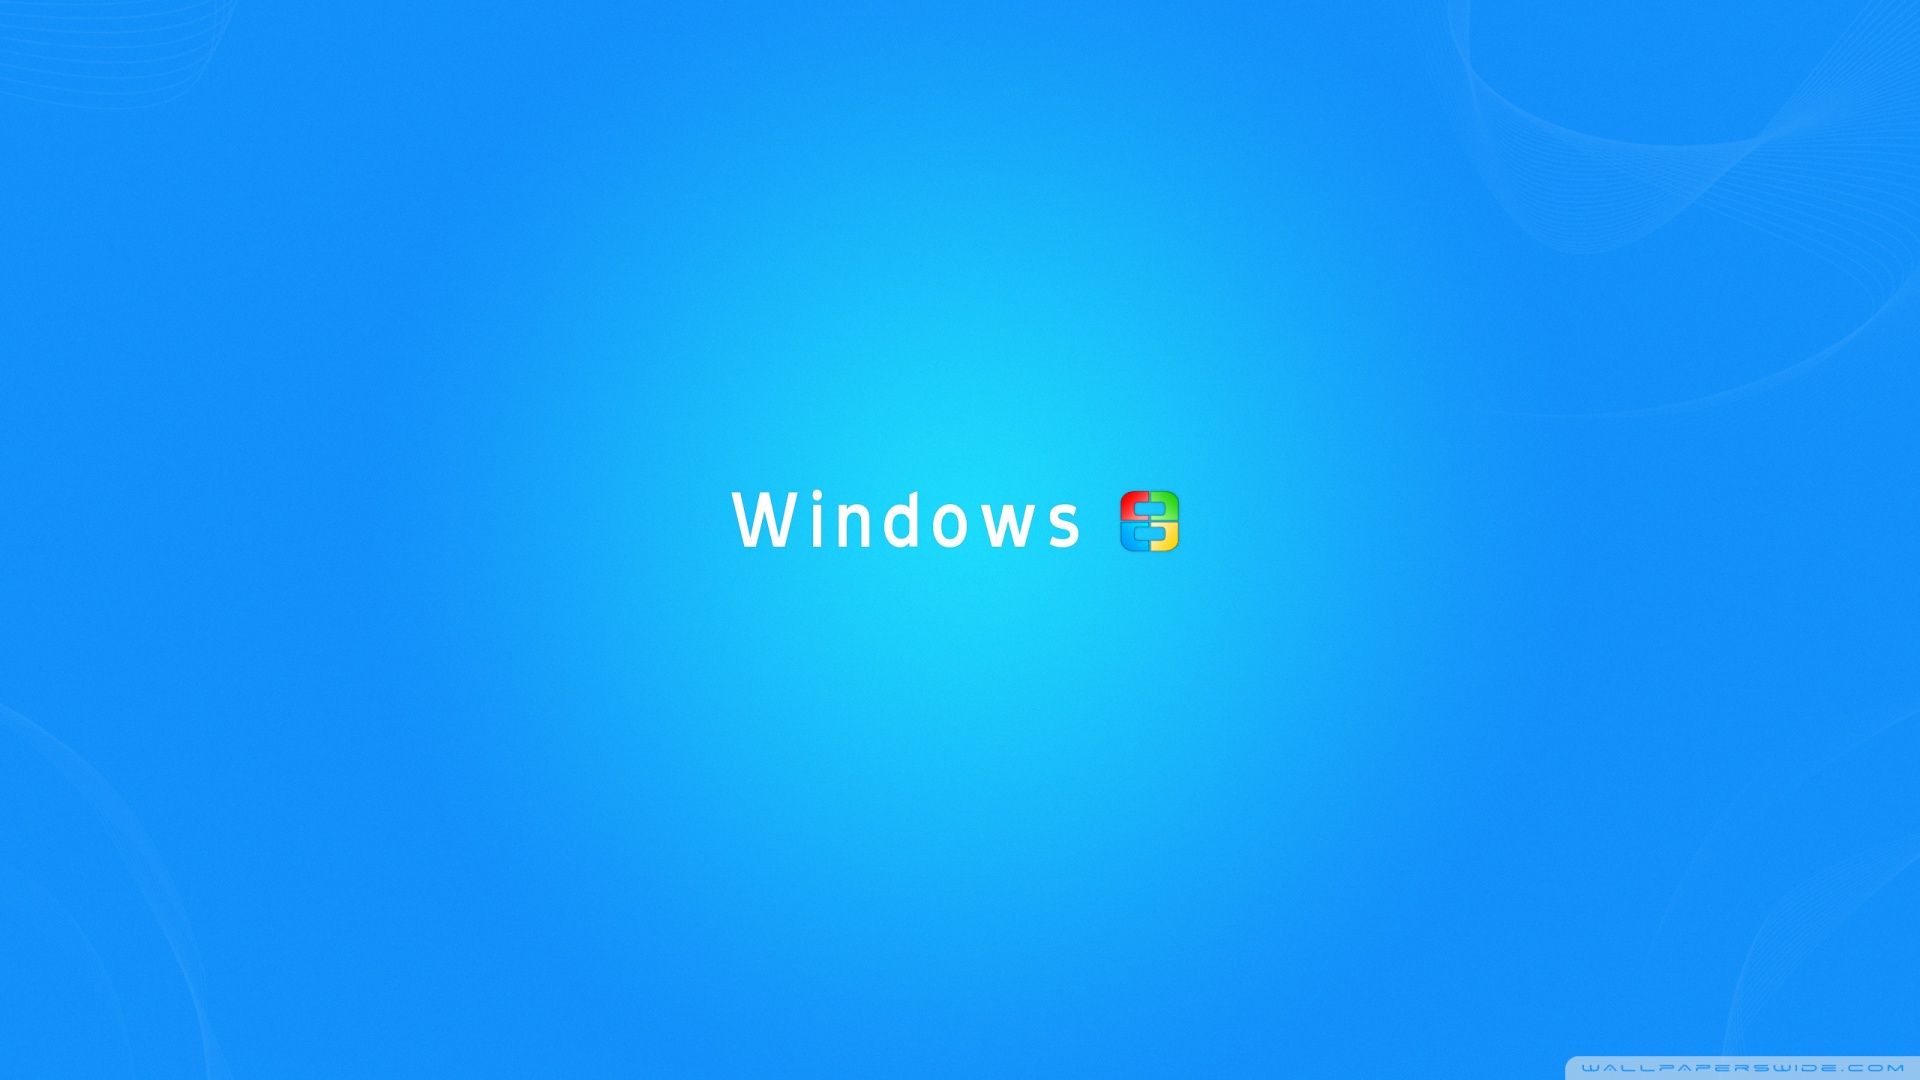 45 Windows 8 1 Hd Wallpapers 19x1080 On Wallpapersafari